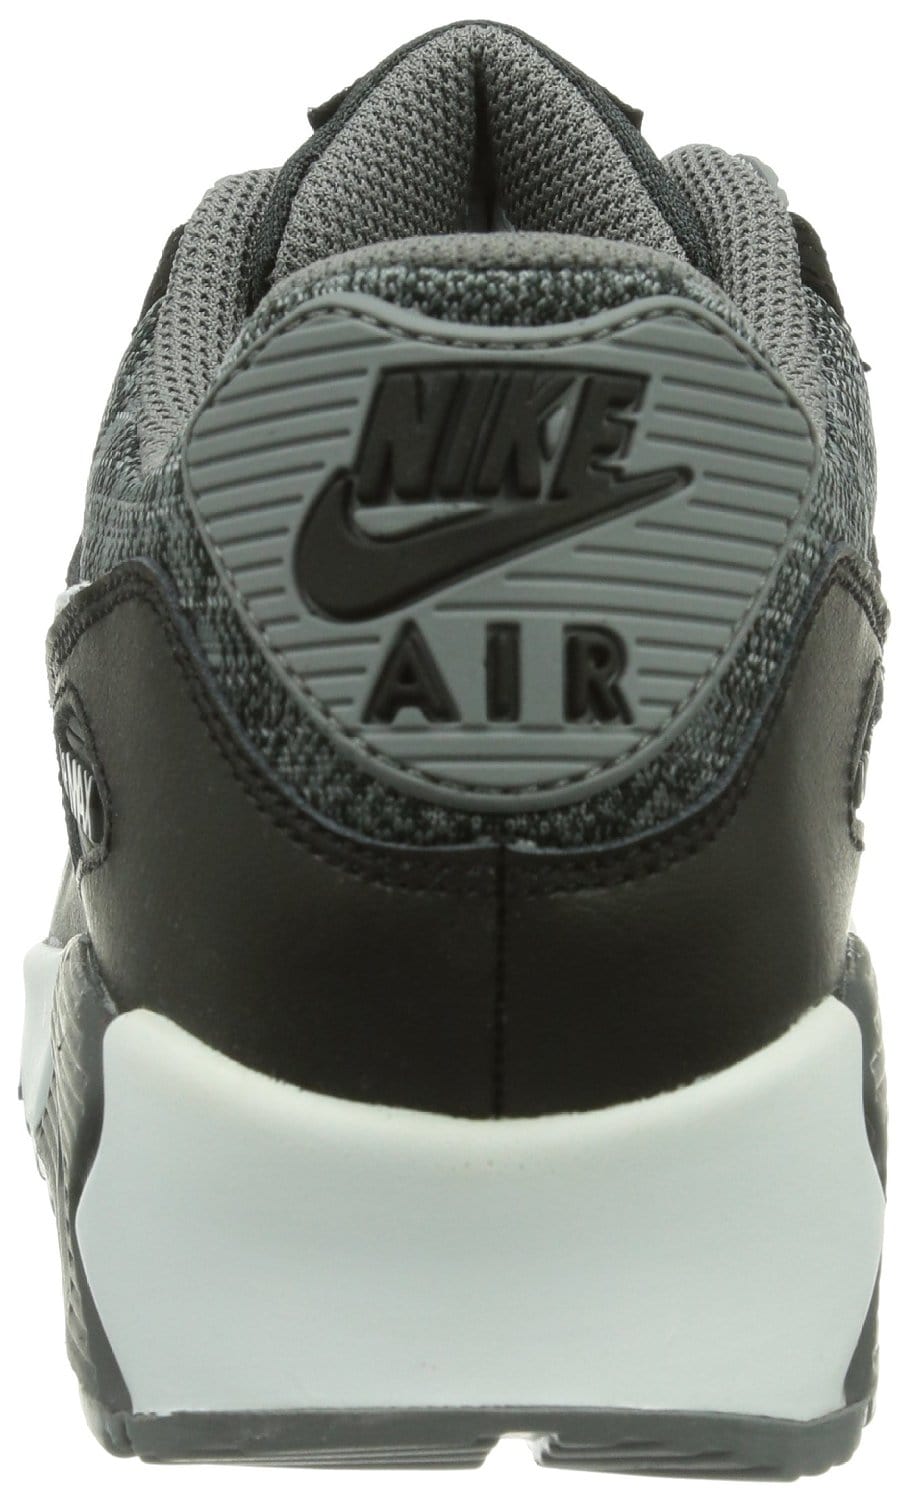 Nike Air Max 90 (GS) Anthracite-White-Black-Cool Grey - Kick Game